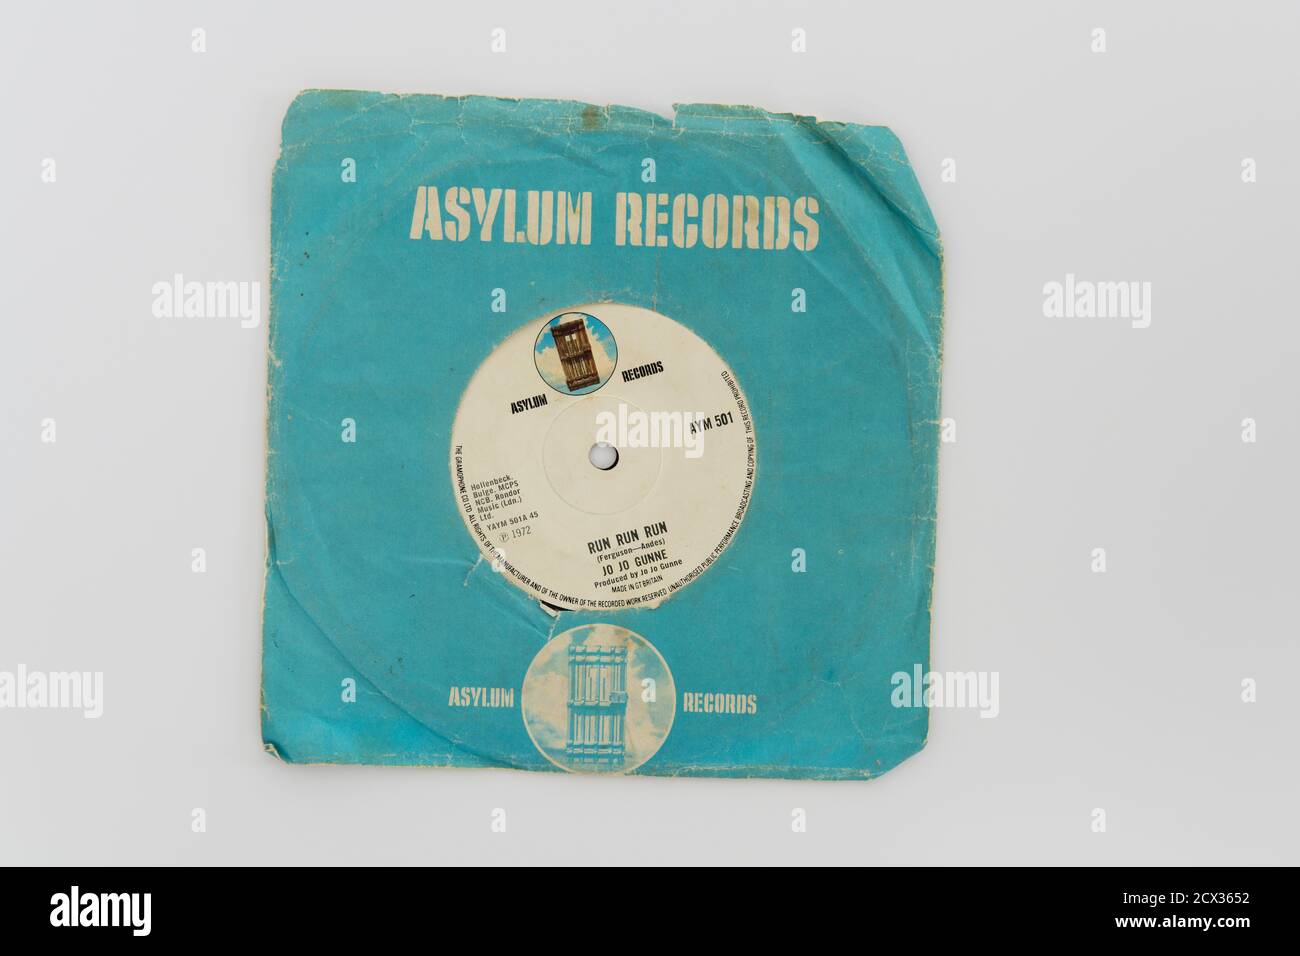 Asylum Records - Jo Jo Gunne - Run Run Run - 1972 single showing the first Asylum label variation Stock Photo